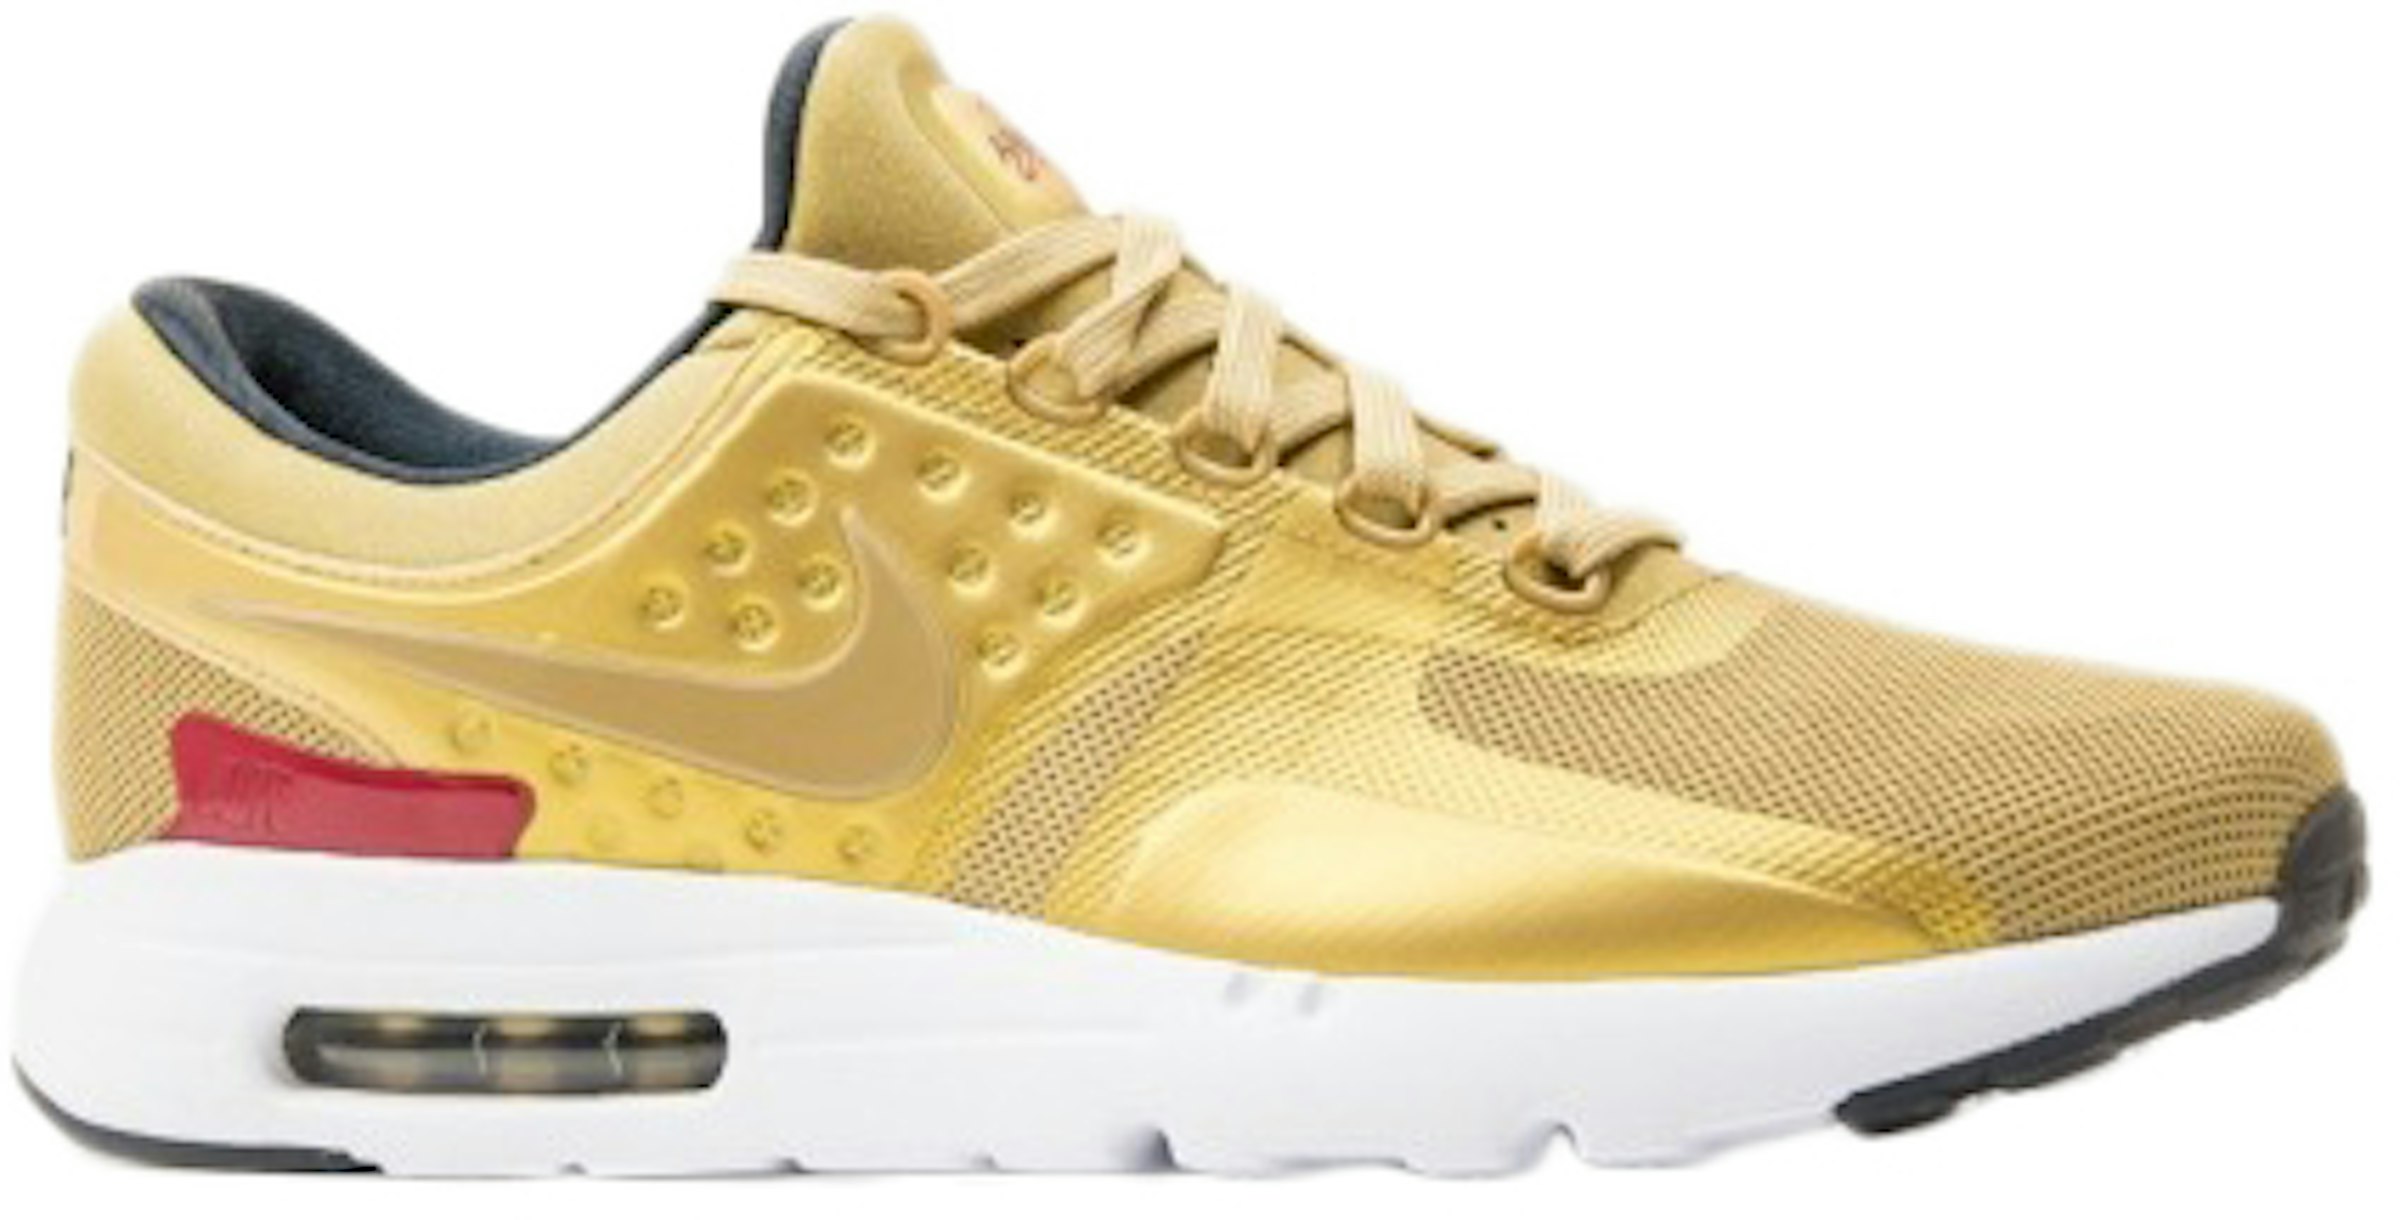 Nike Air Max Metallic Gold (Women's) - 863700-700 - US